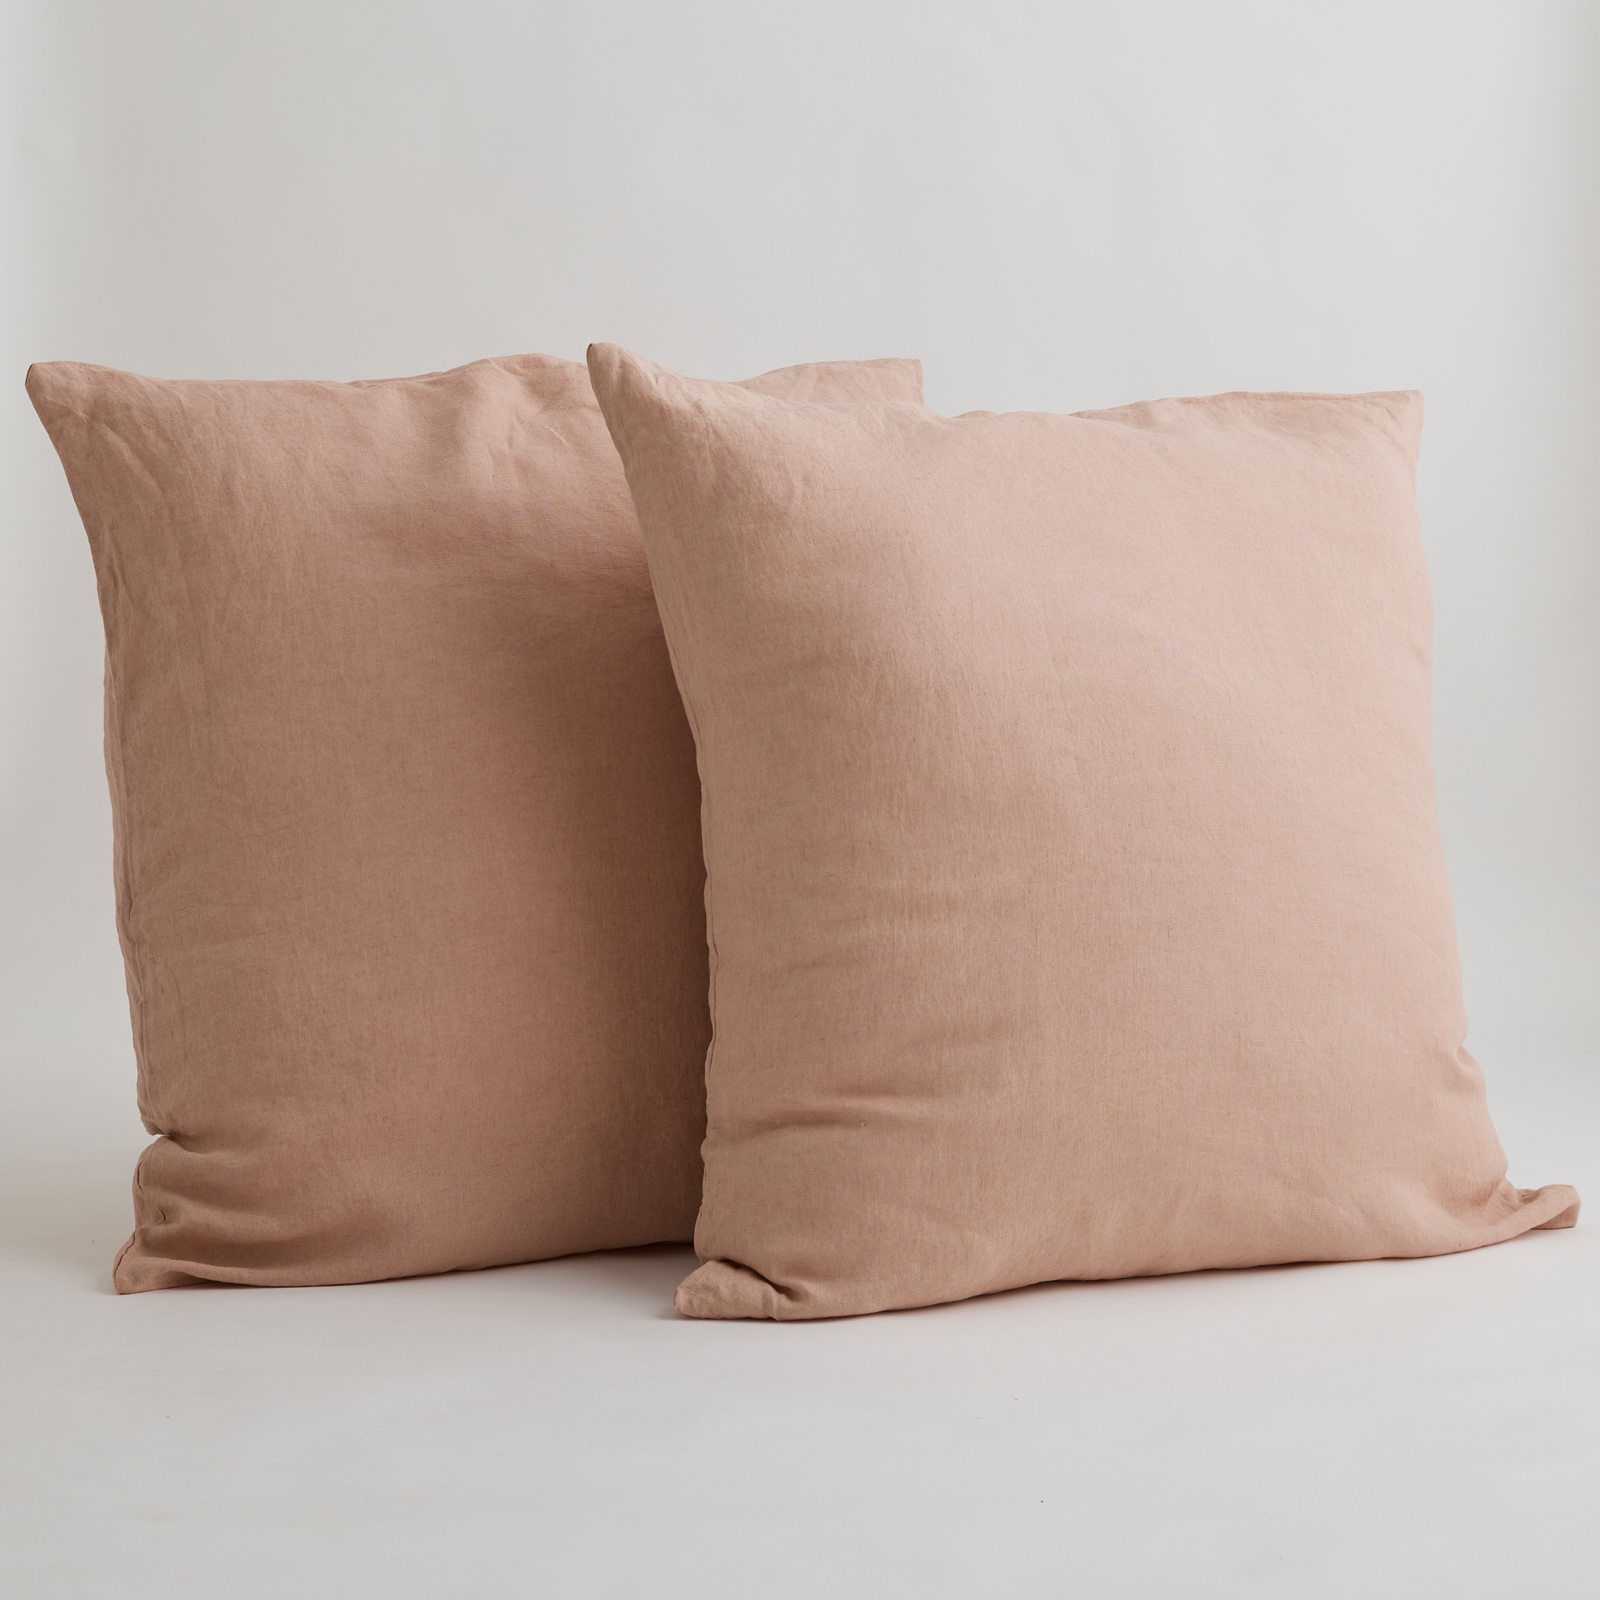 100% Pure Linen European Pillowcase Set in Clay (2)